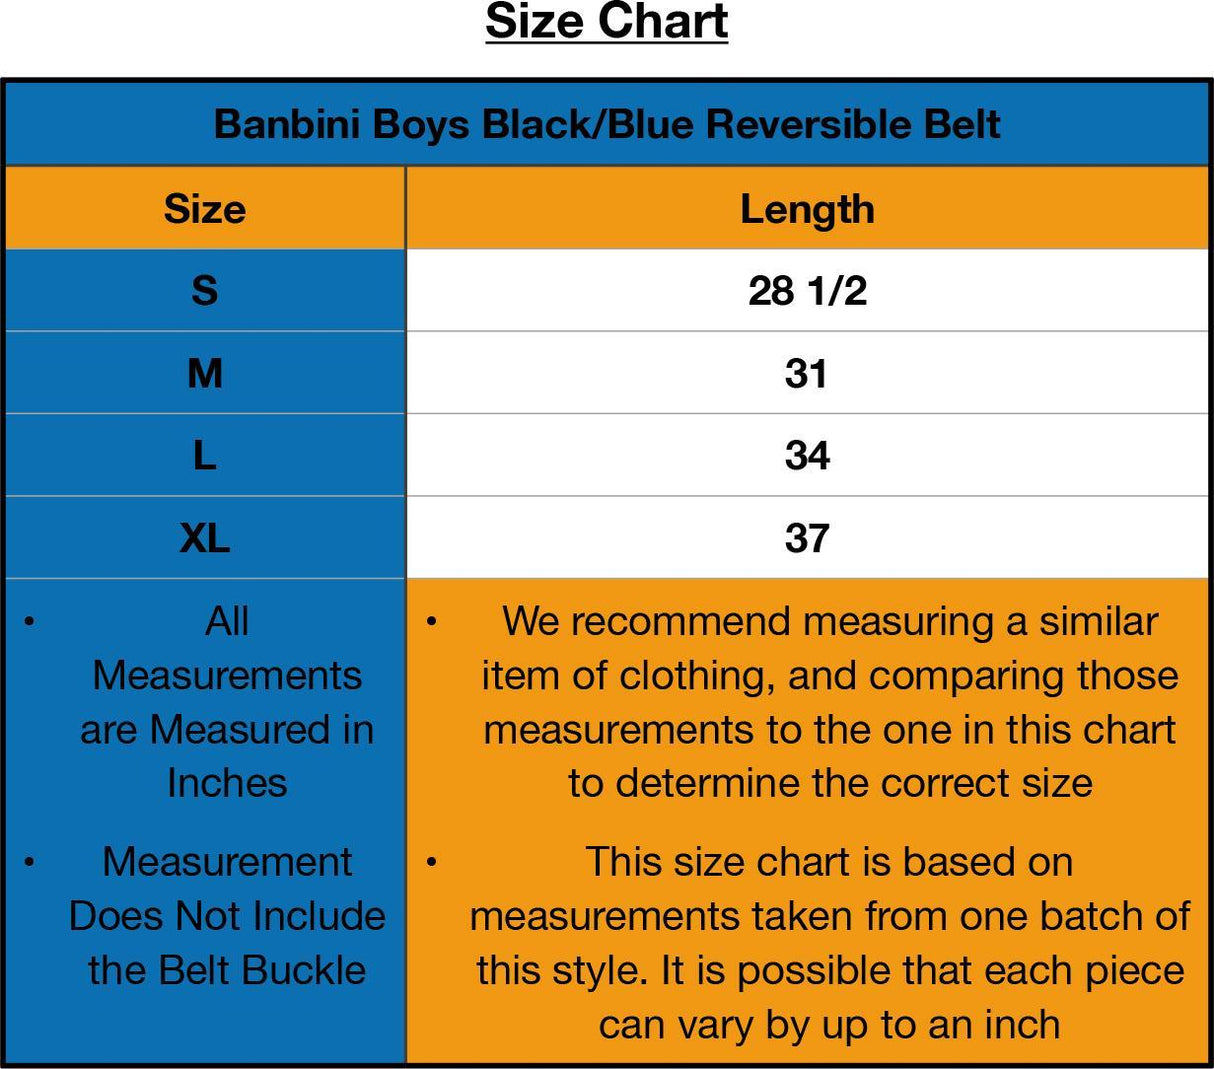 Banbini Boys Black/Blue Reversible Belt